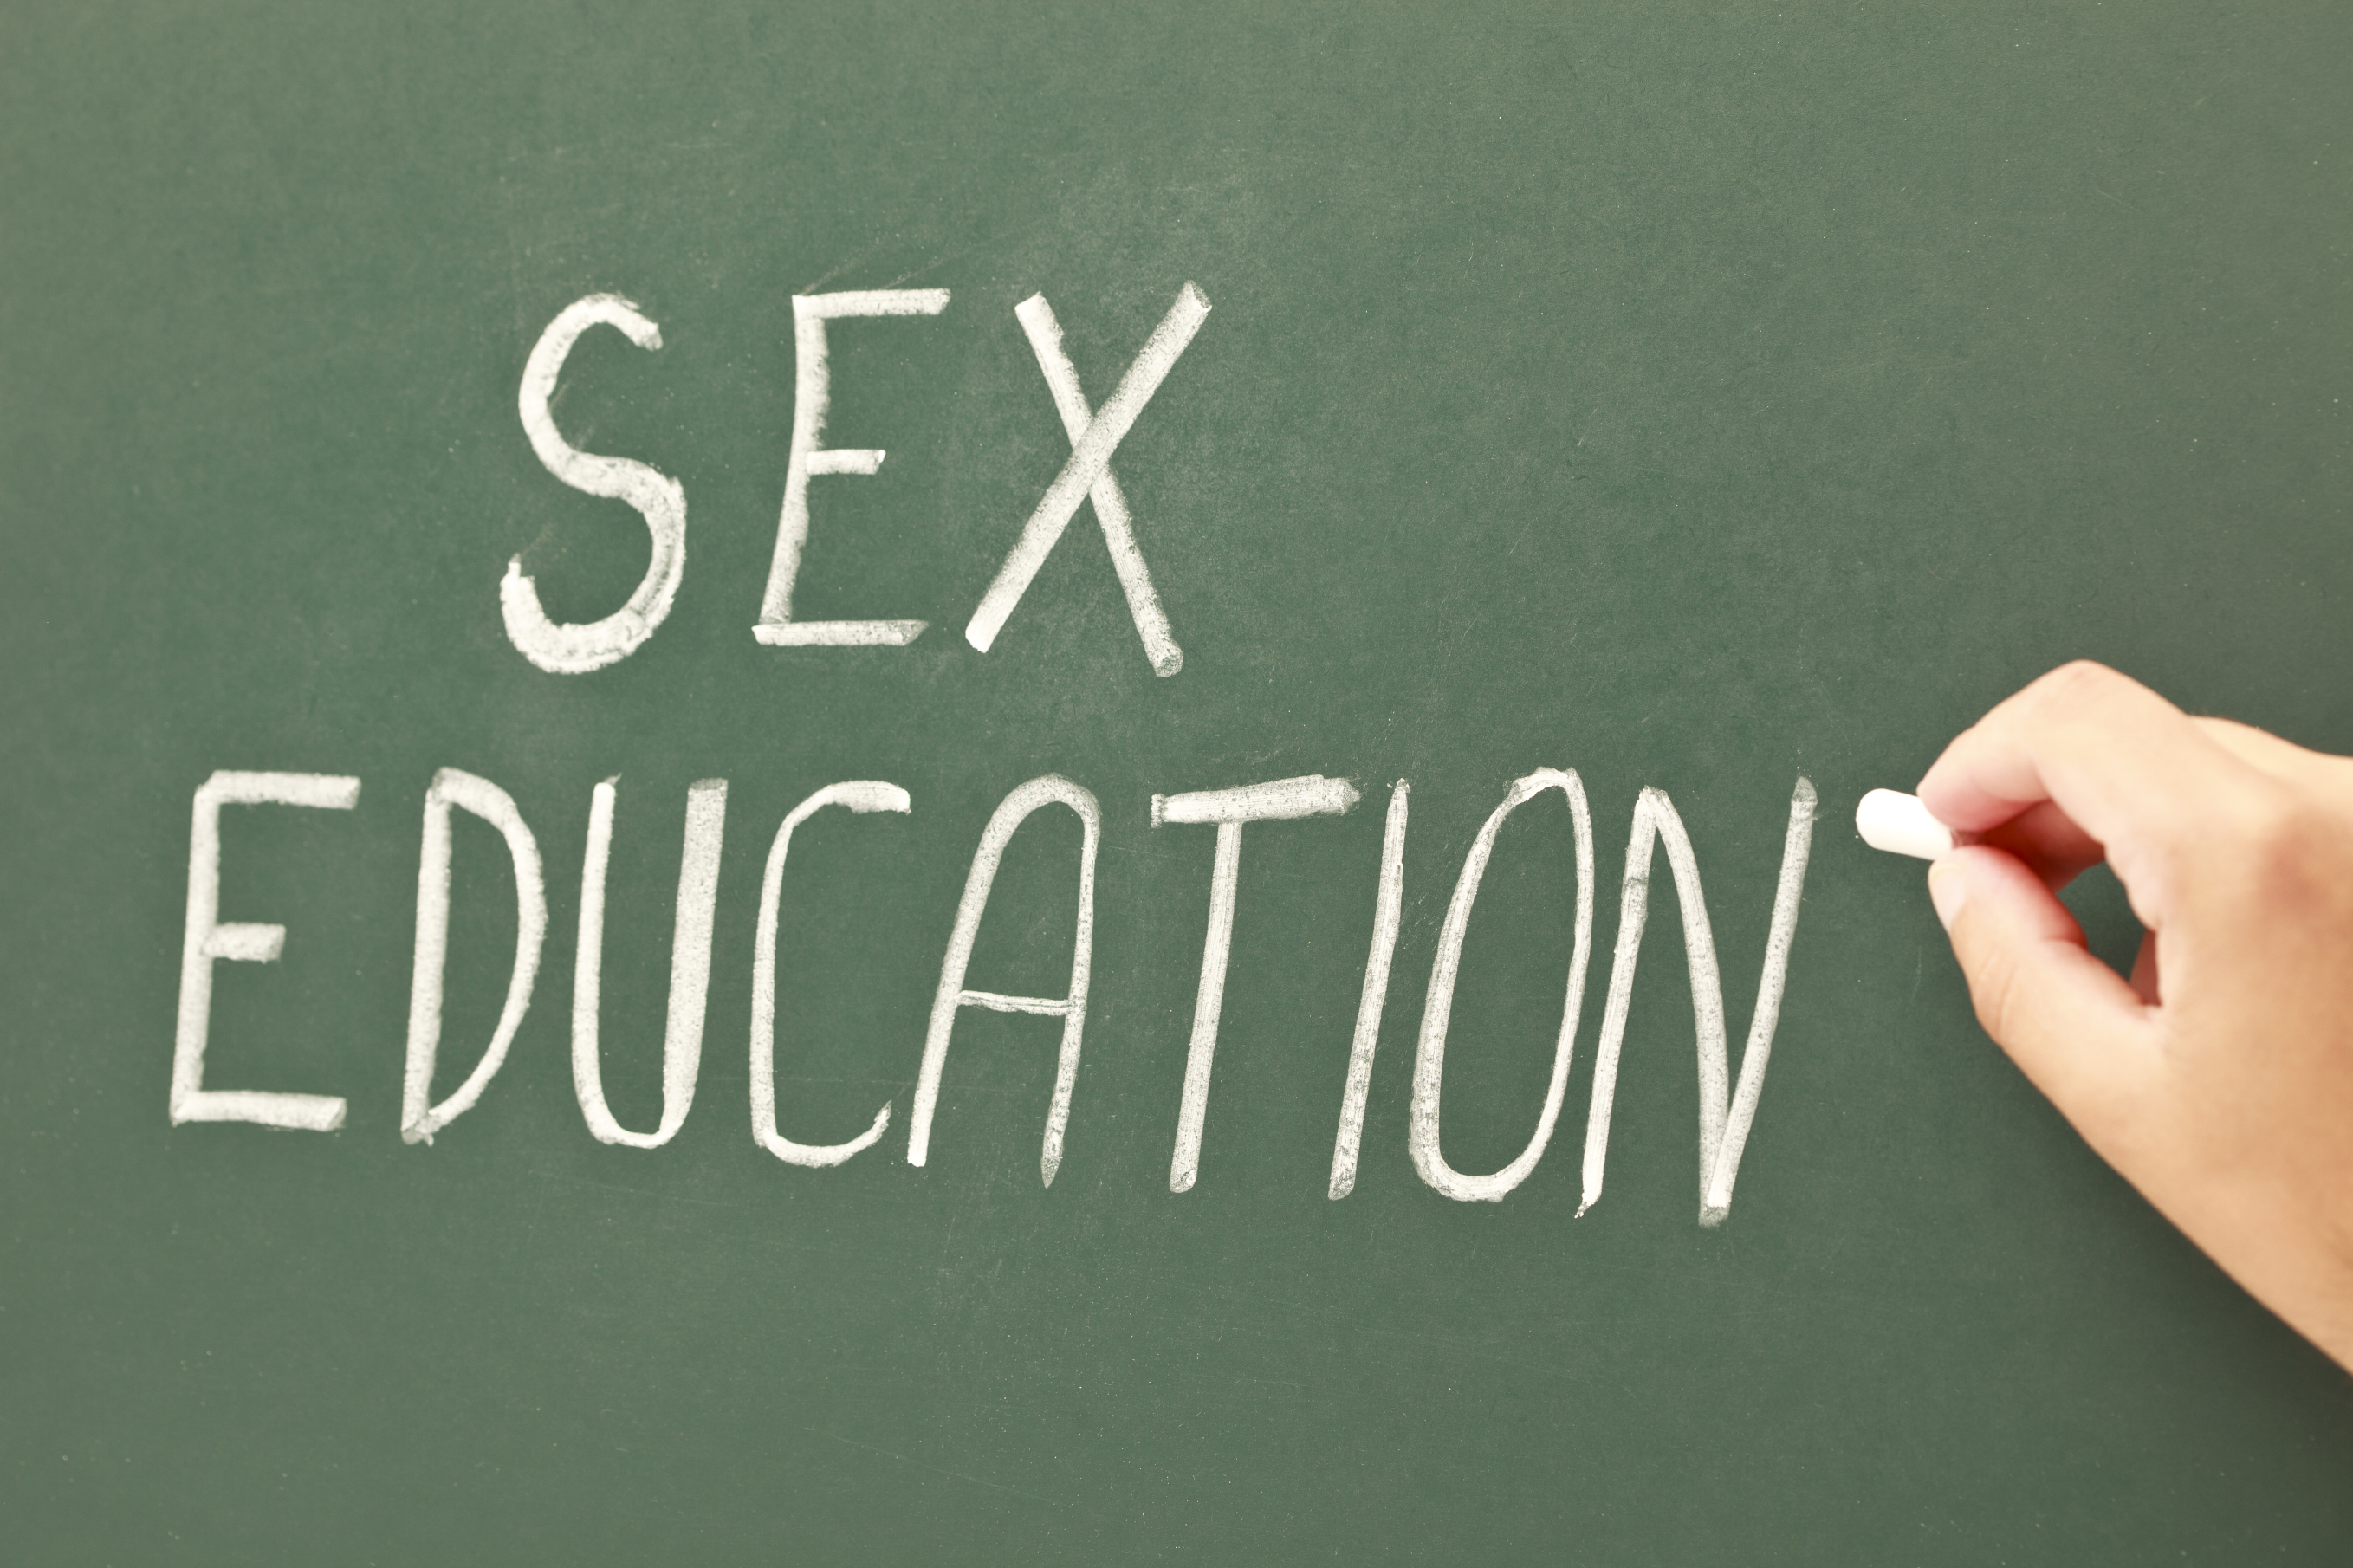 Christian sex education curriculum